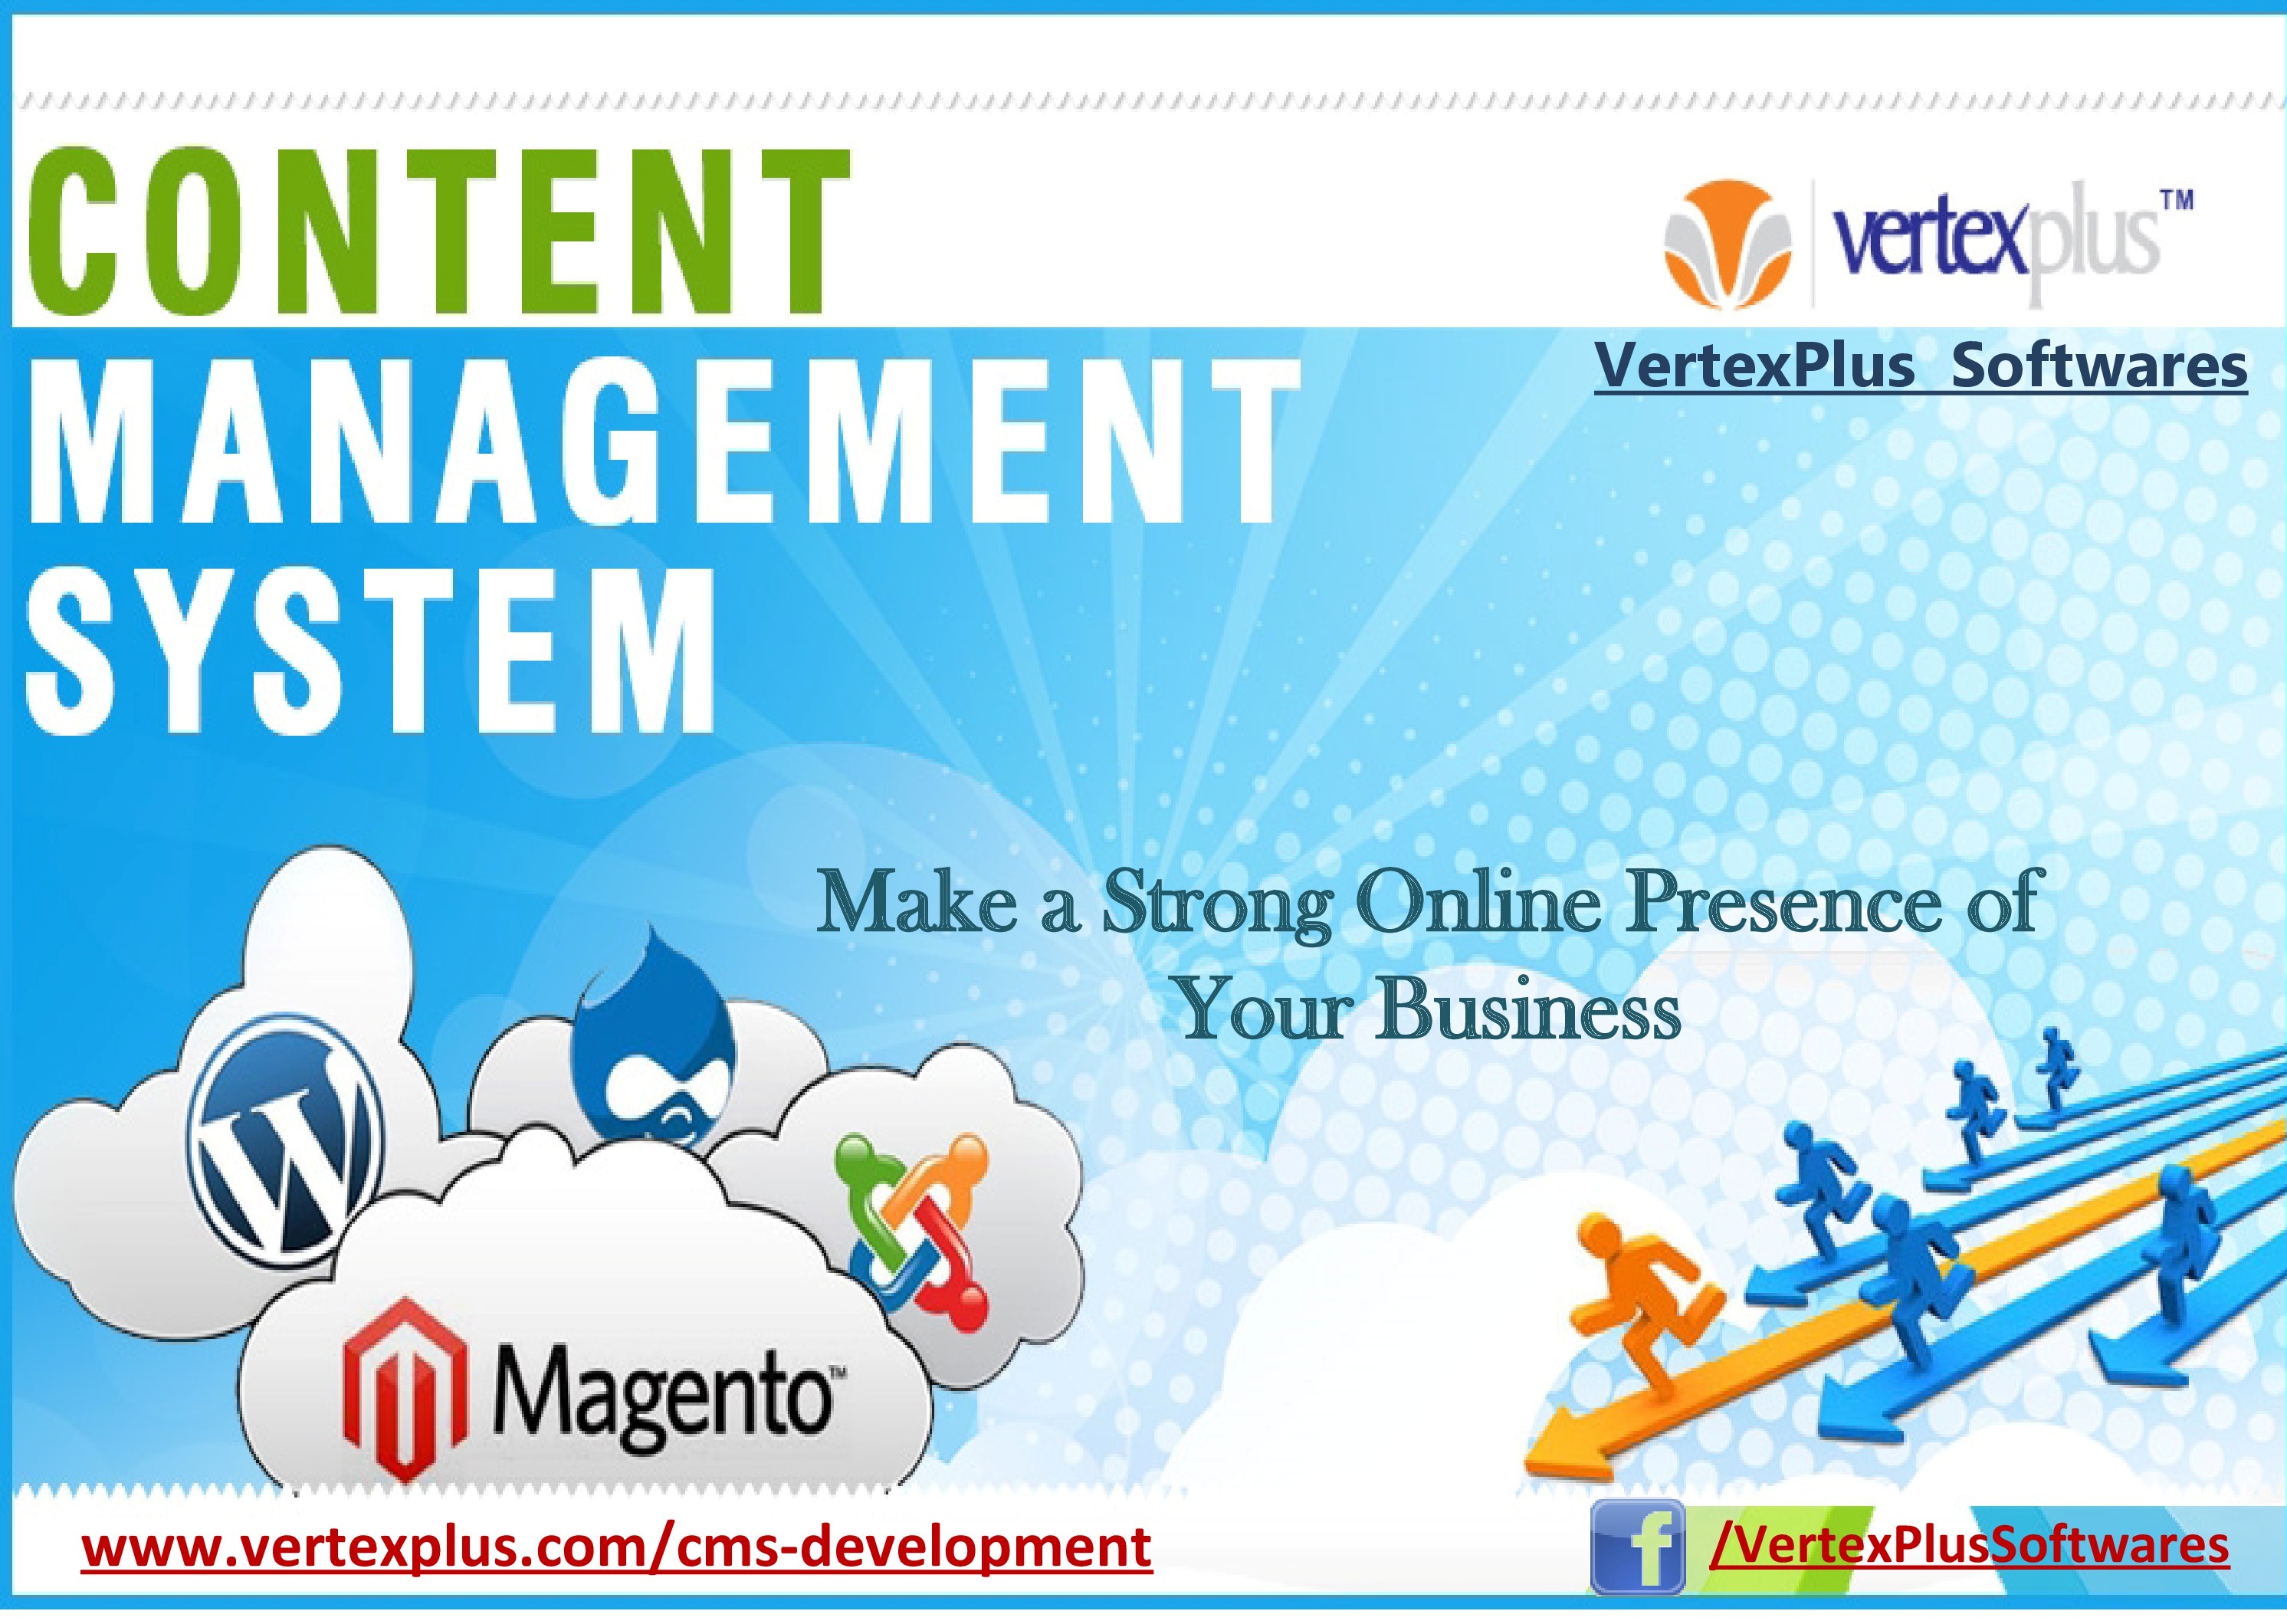 CMS Development by Vertexplus Software.jpg  by vertexplus